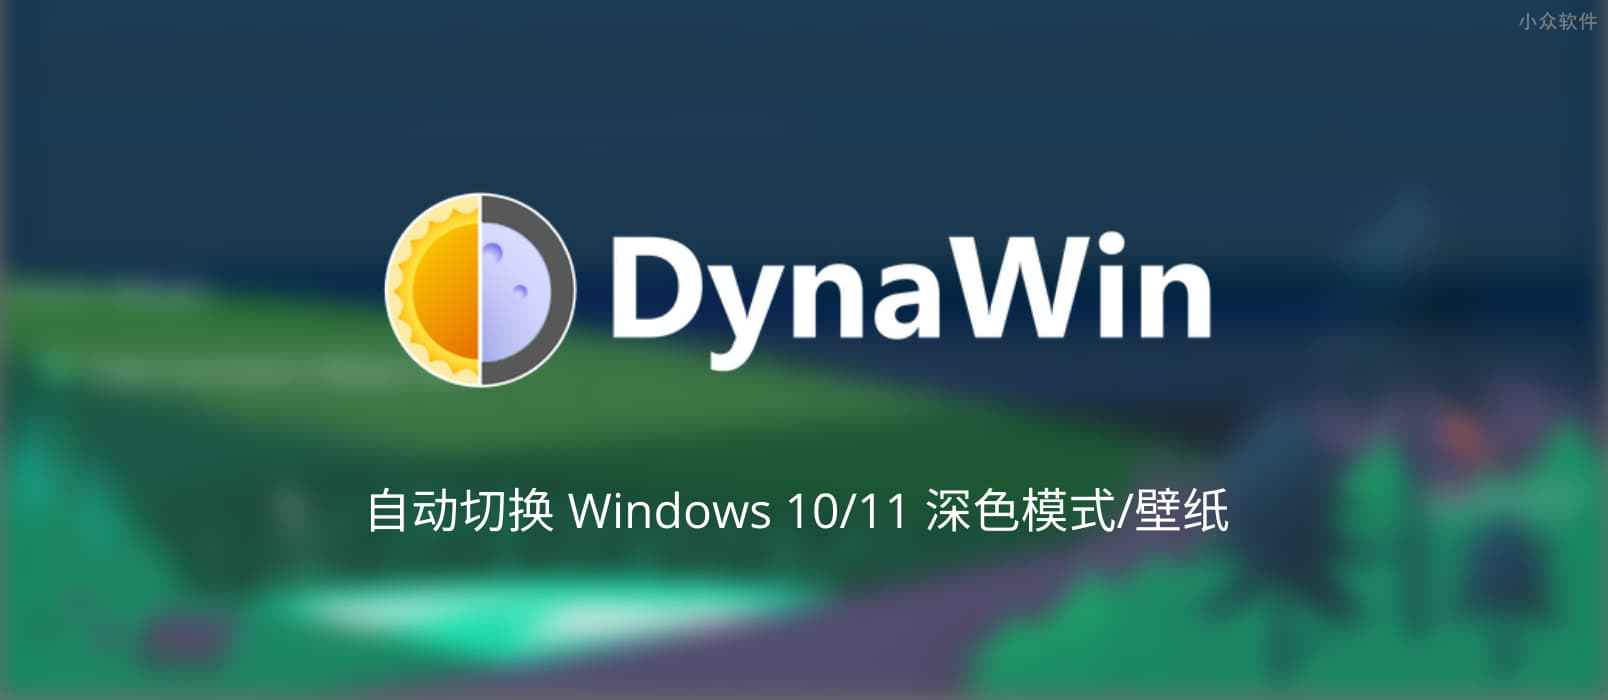 DynaWin – 让 Windows 10/11 根据时间自动切换深色模式，还支持自动更换壁纸